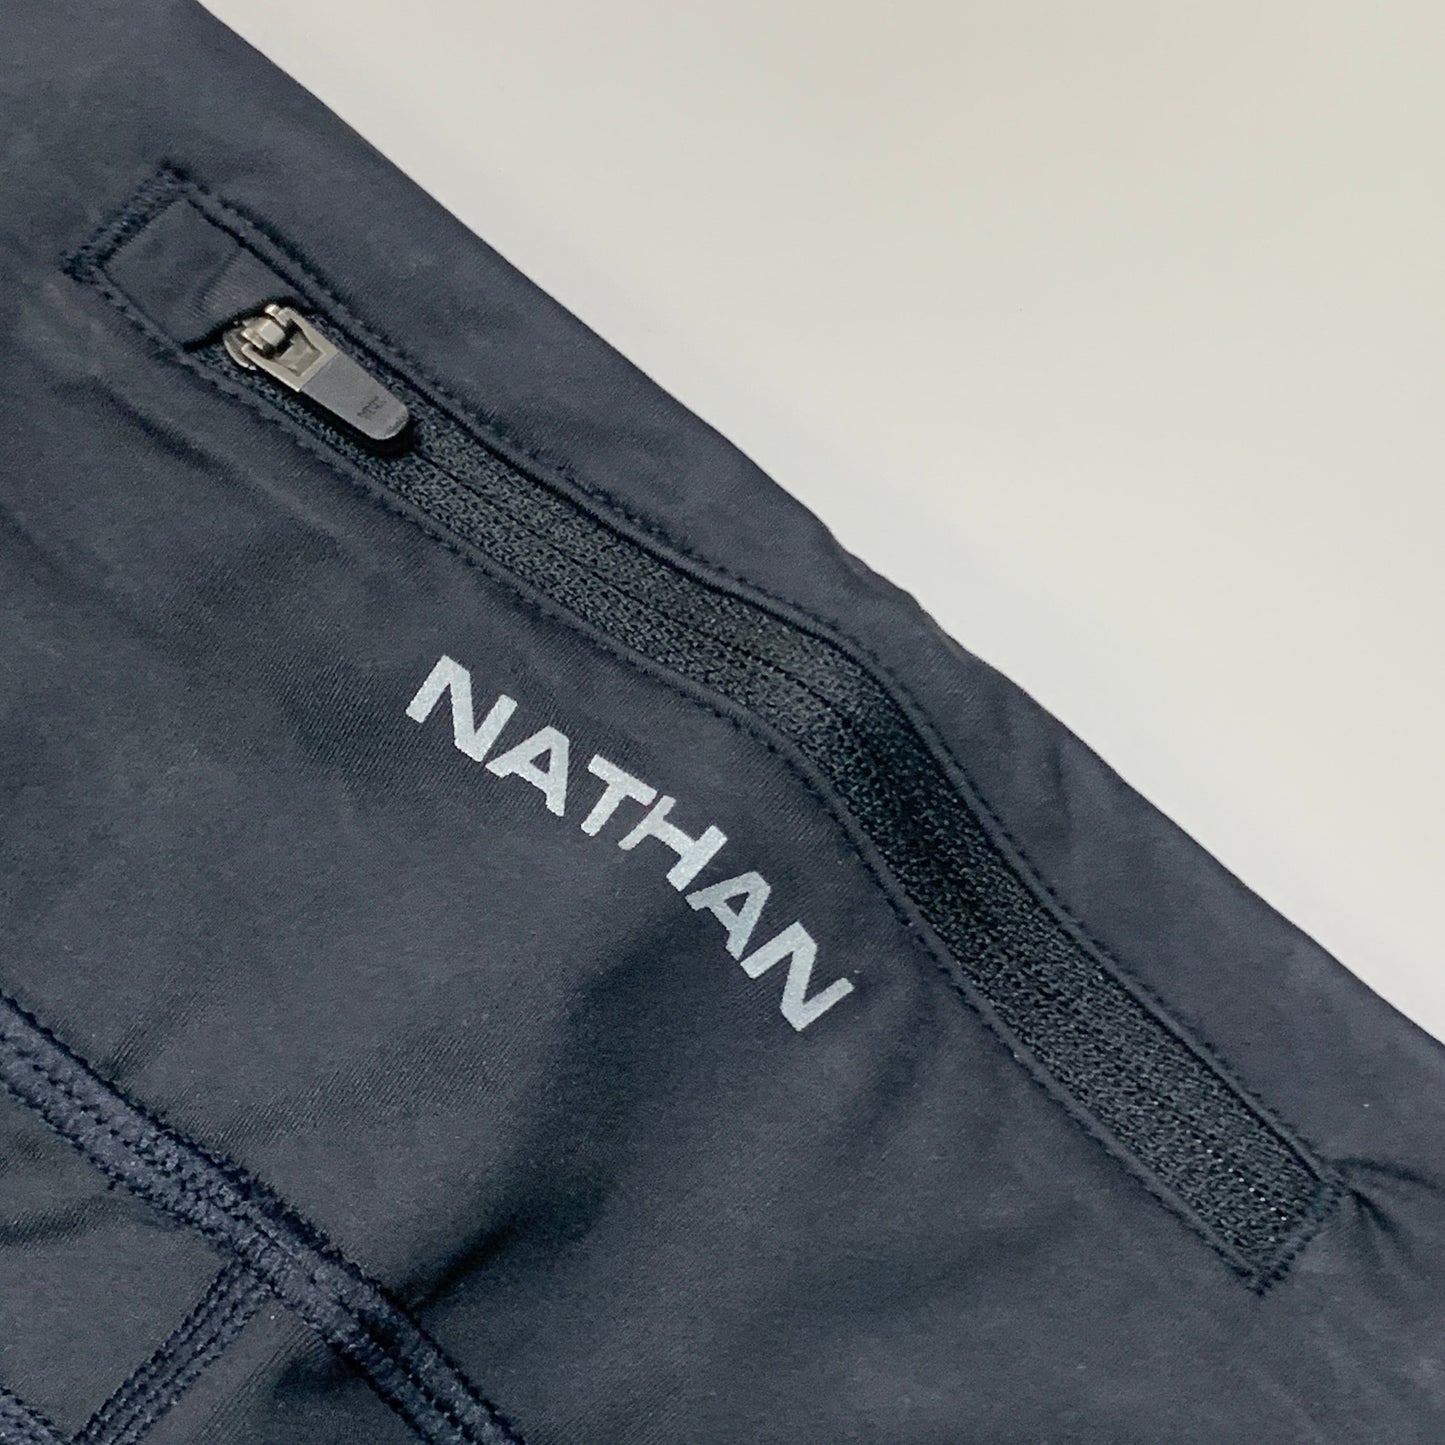 NATHAN Interval 6" Inseam Bike Short Women's Black Size S NS51520-00001-S